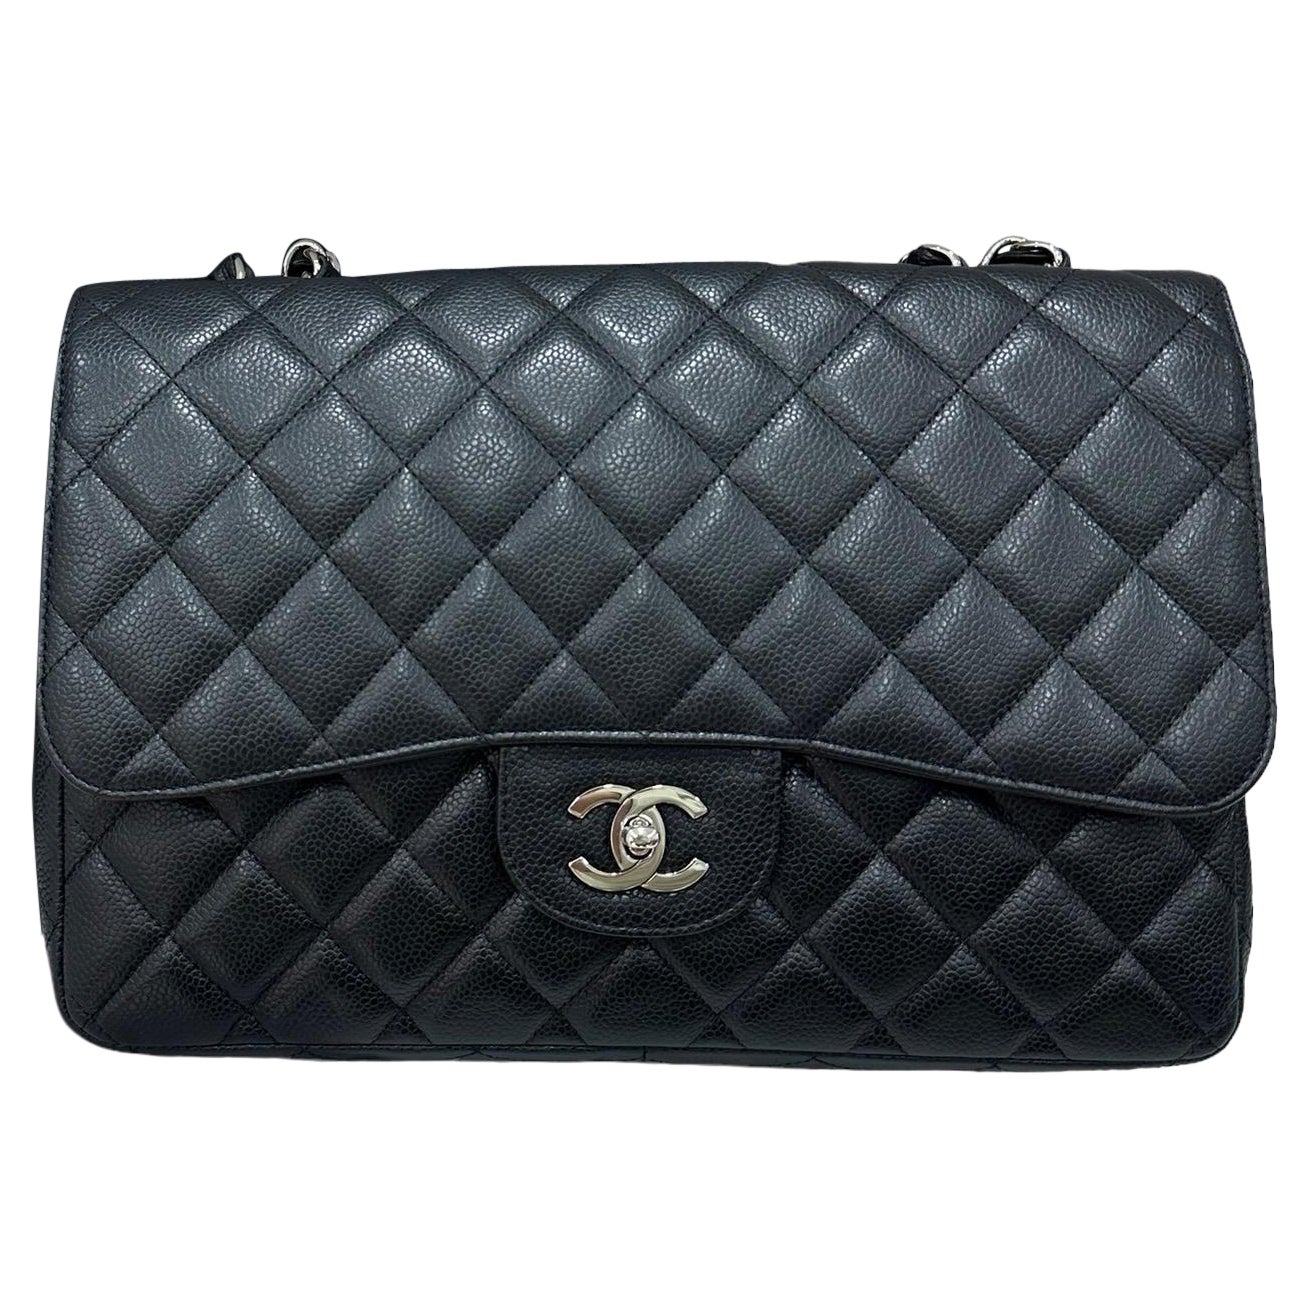 2009 Chanel Jumbo Black Caviar Leather Top Shoulder Bag  For Sale